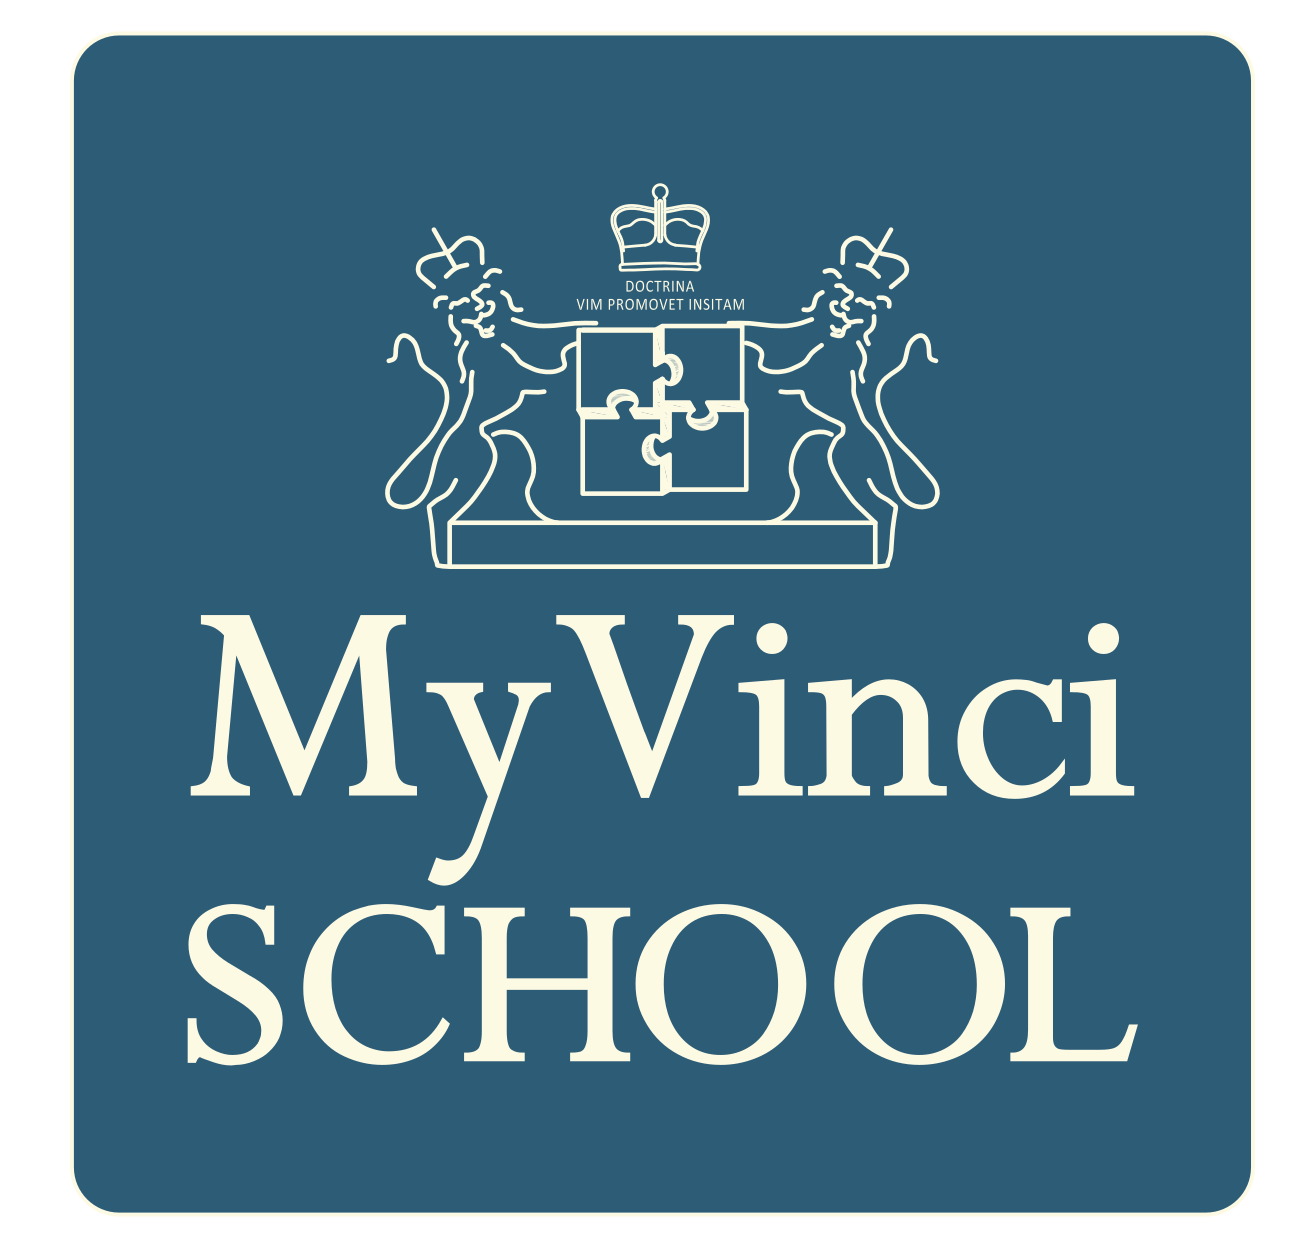 My Vinci School